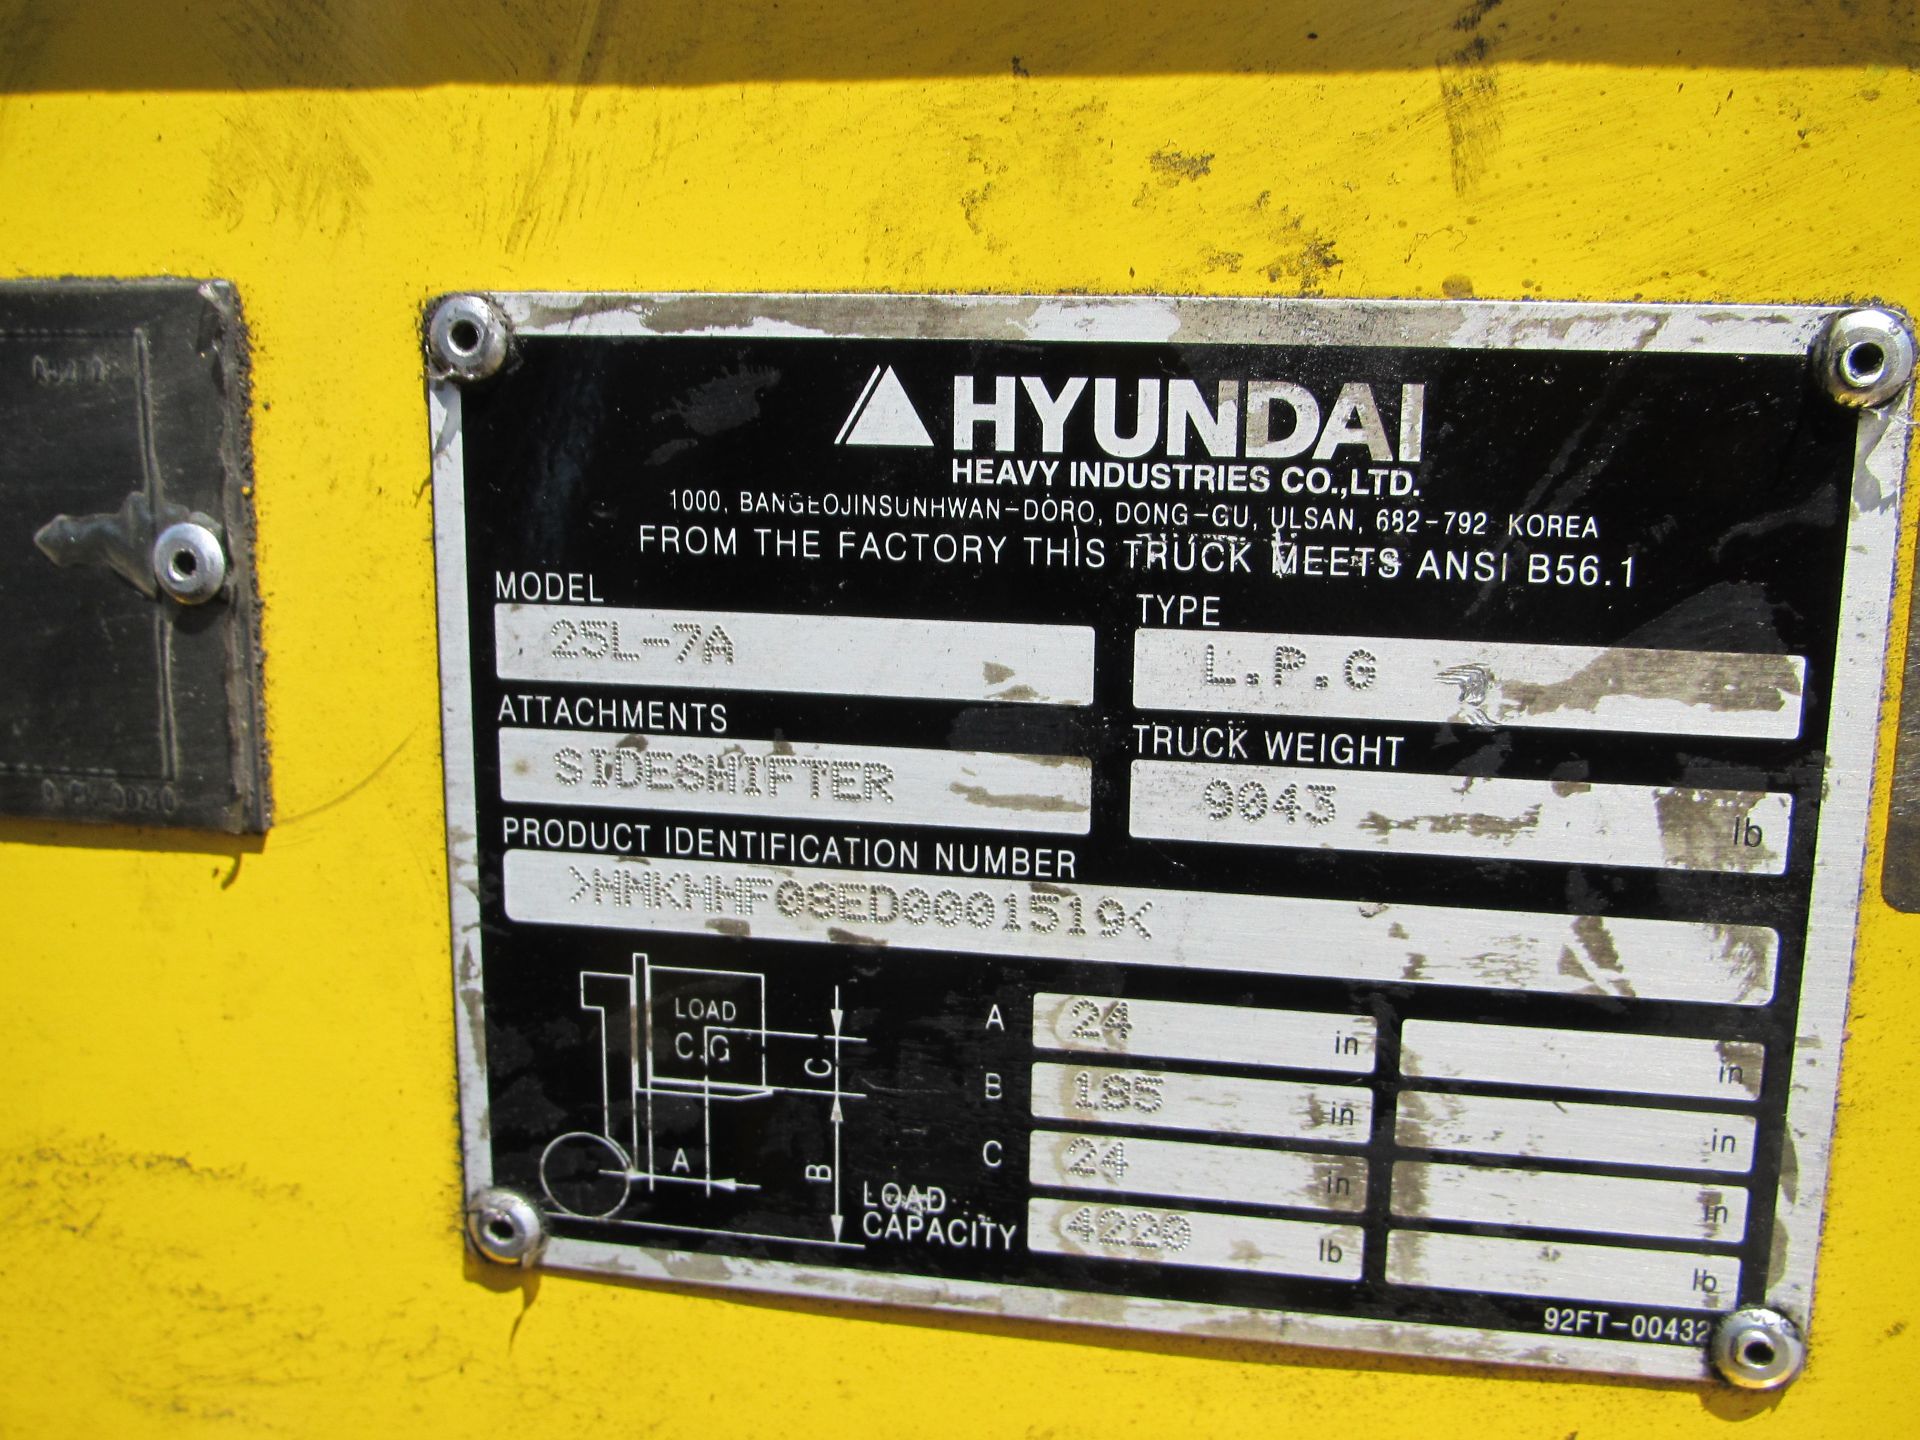 Hyundai 25L-7A 5,000lb Forklift - Image 10 of 10